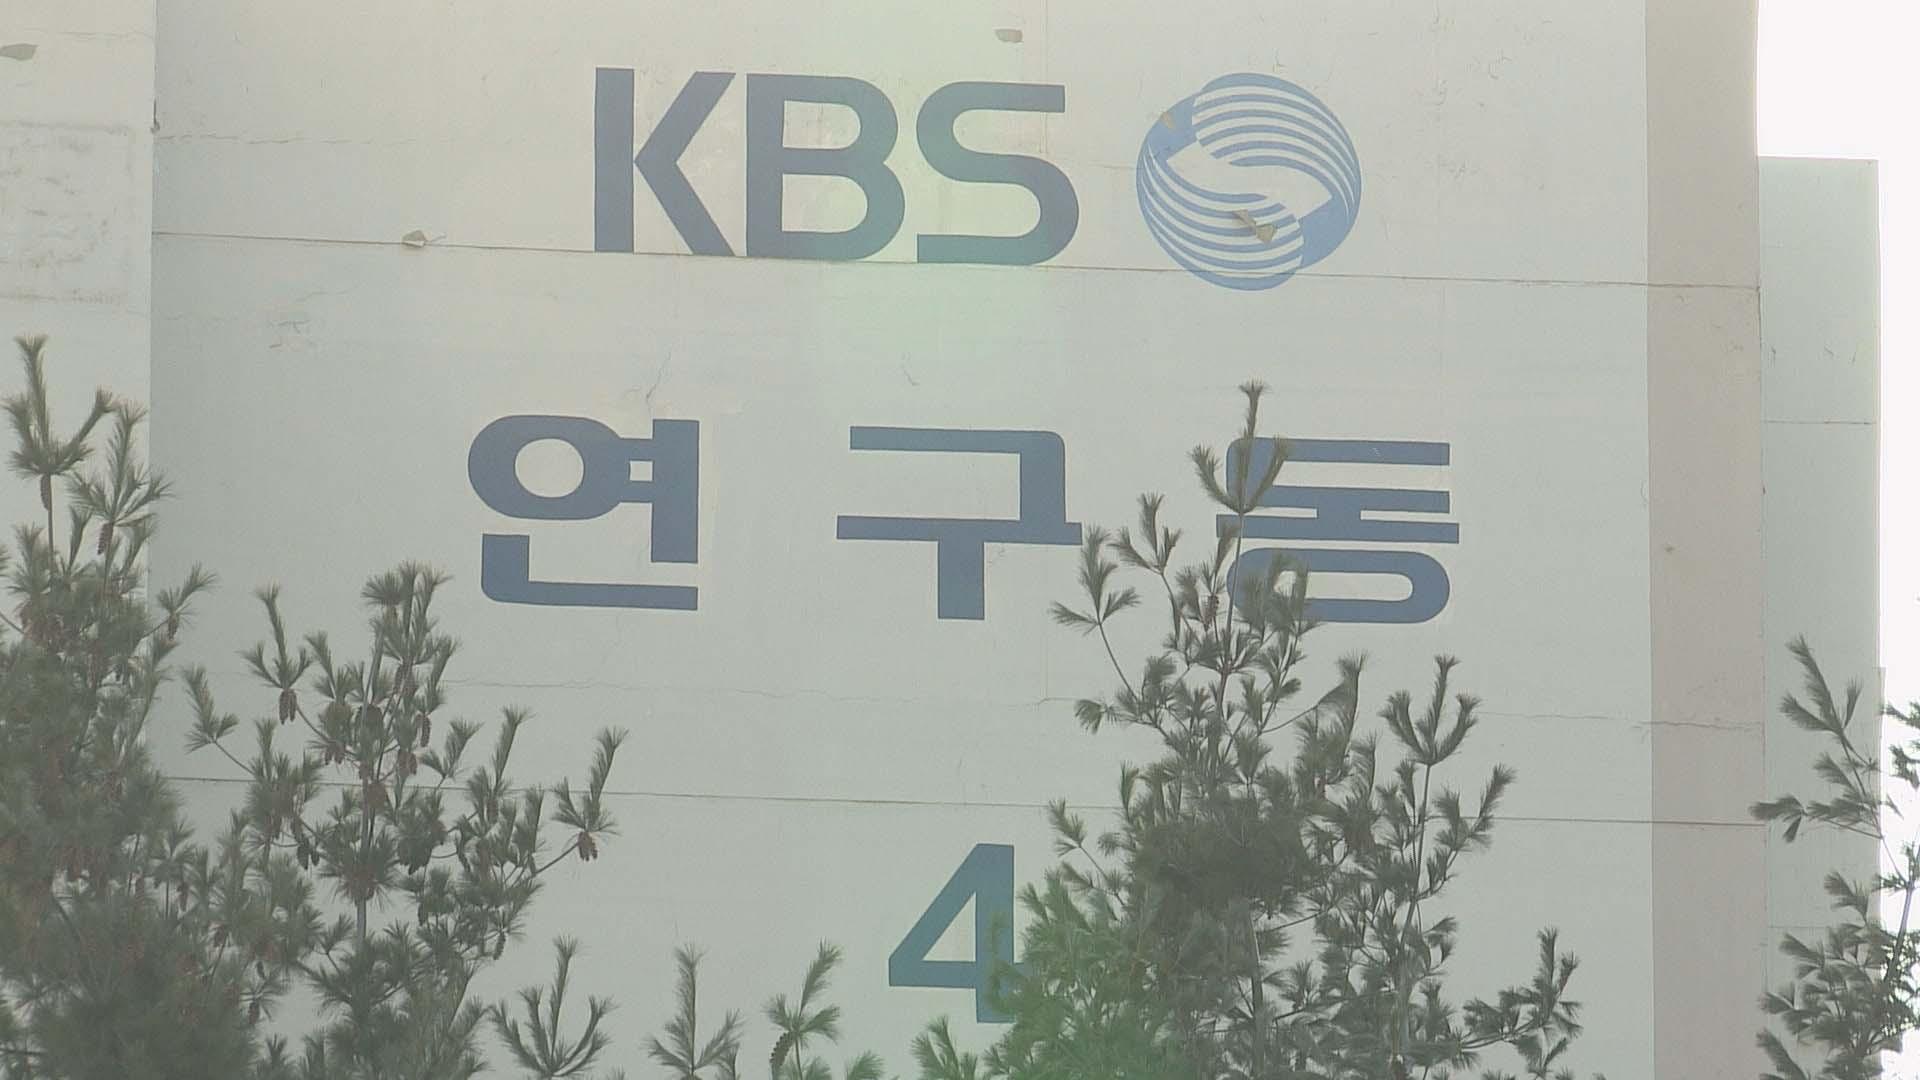 KBS 연구동 여자화장실서 몰카 발견…경찰 수사 : 뉴스어라운드 - TV줌